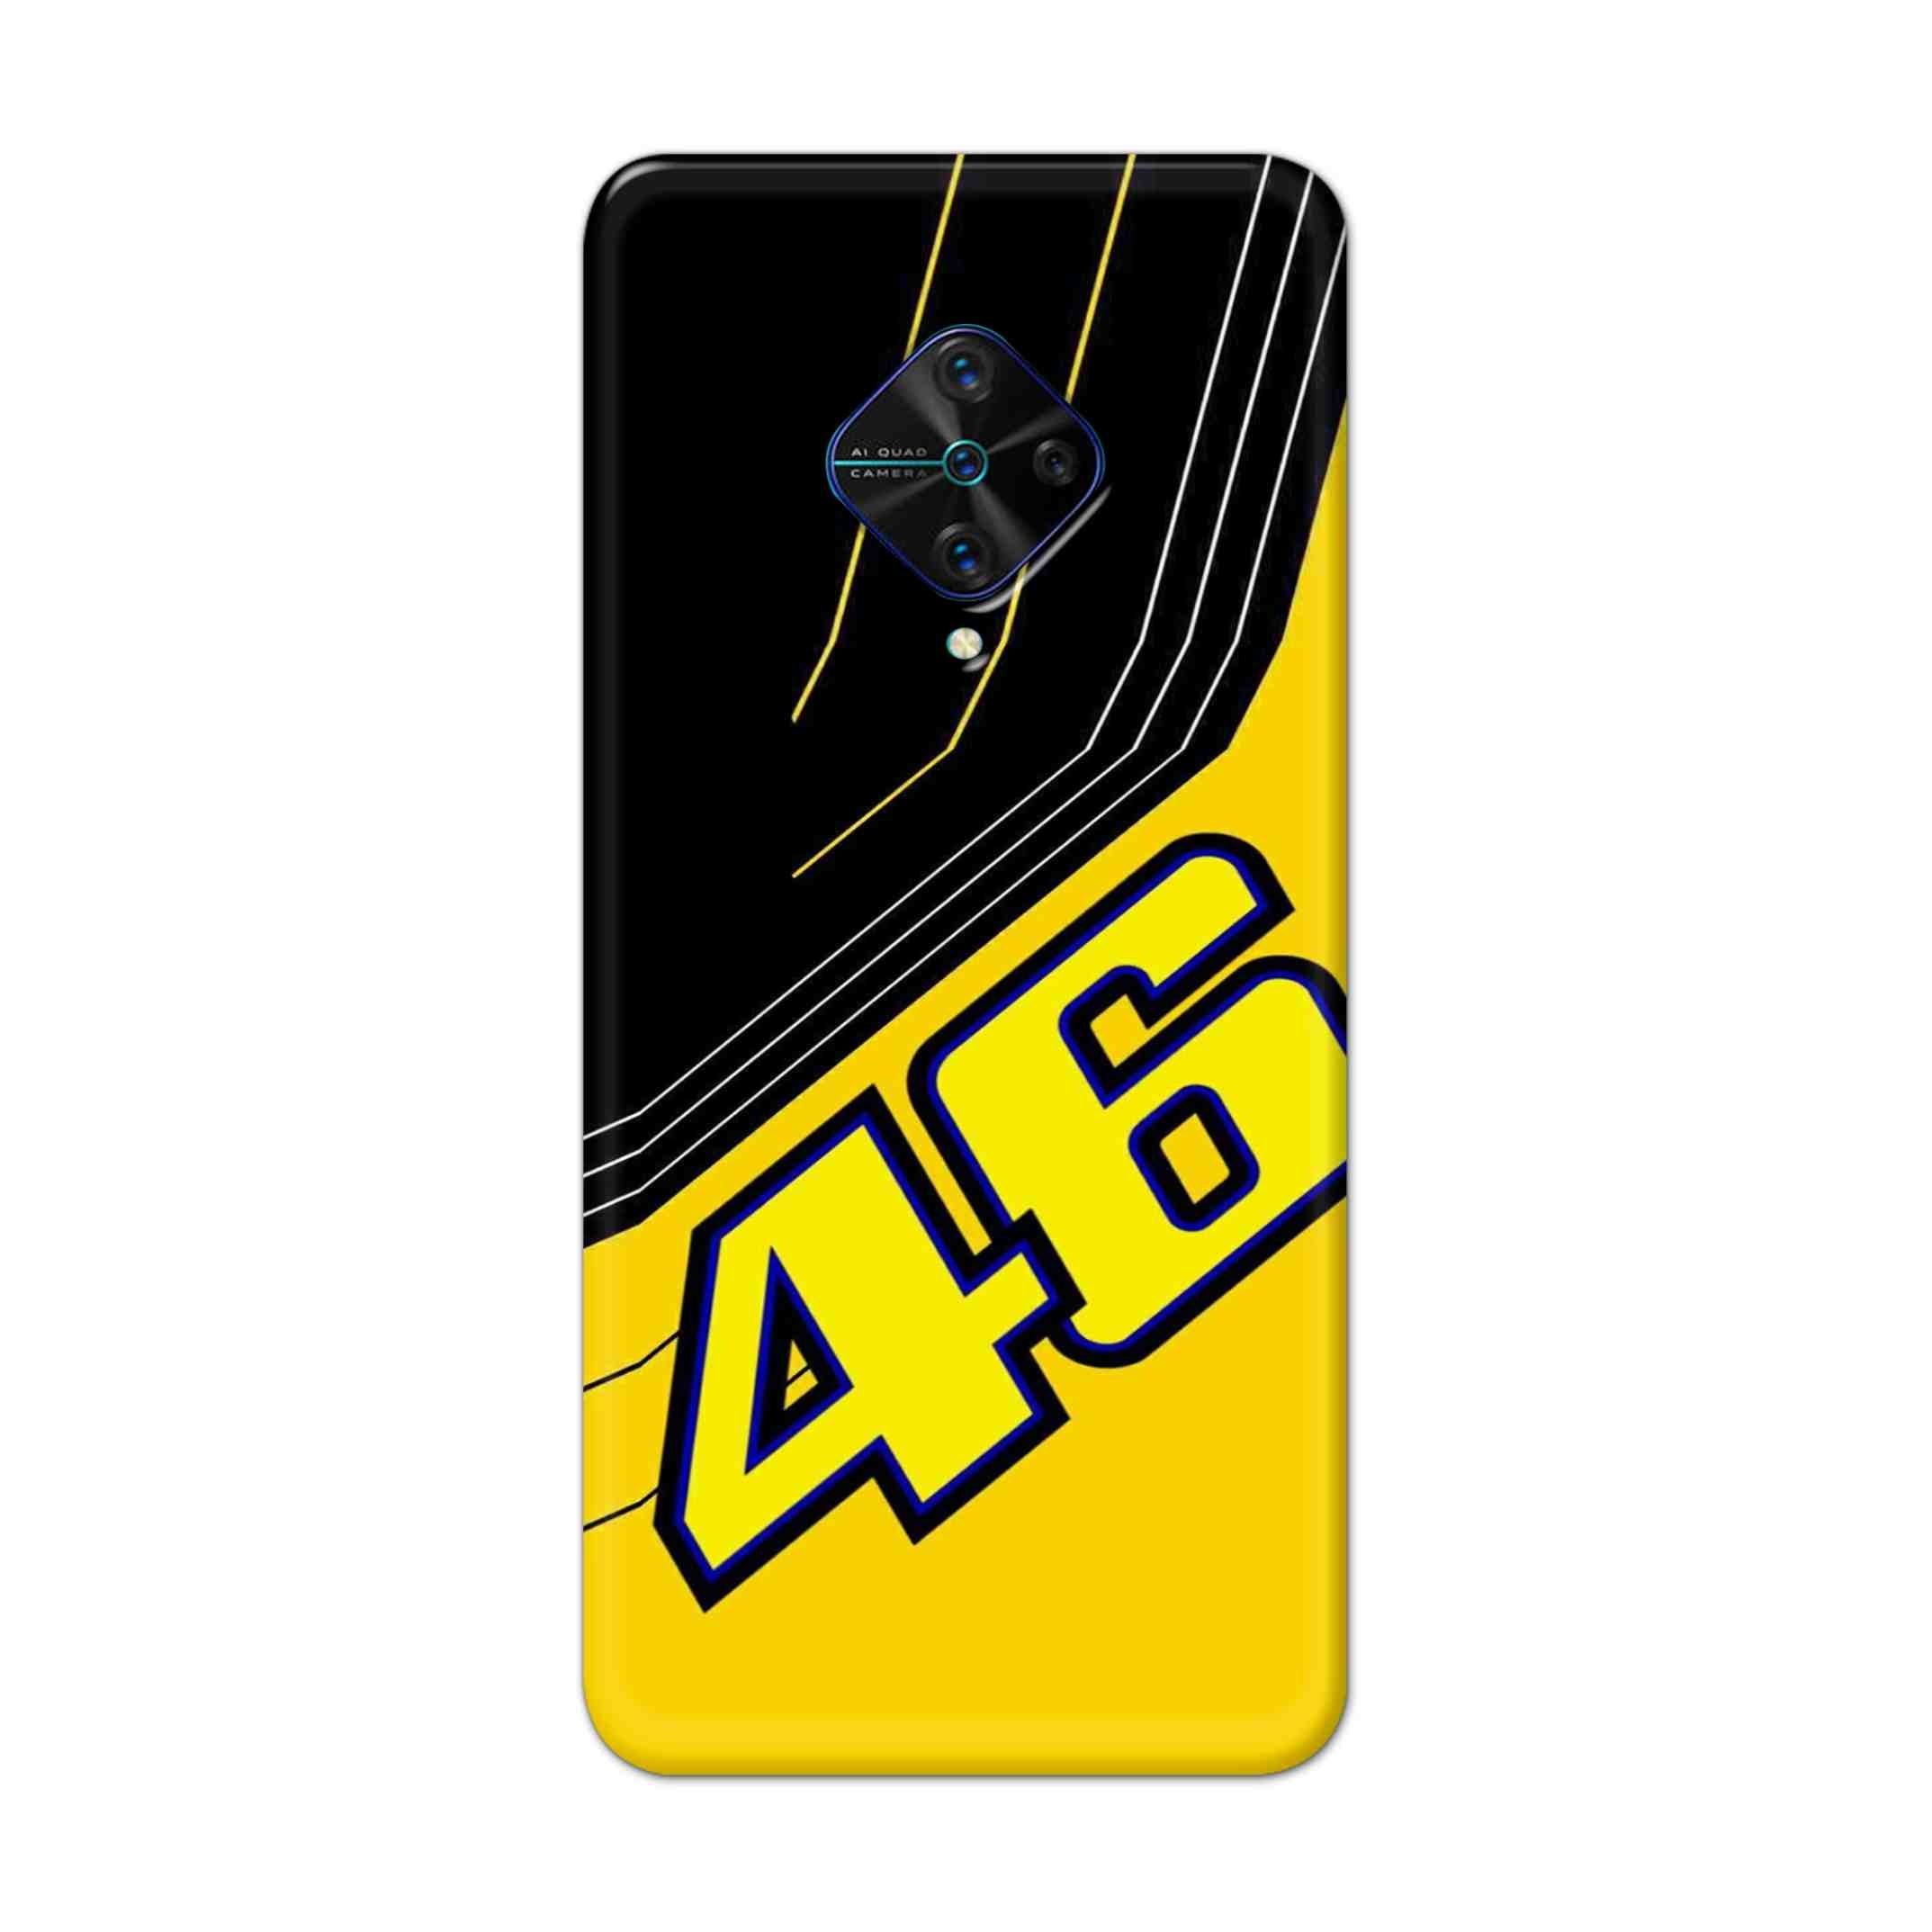 Buy 46 Hard Back Mobile Phone Case Cover For Vivo S1 Pro Online